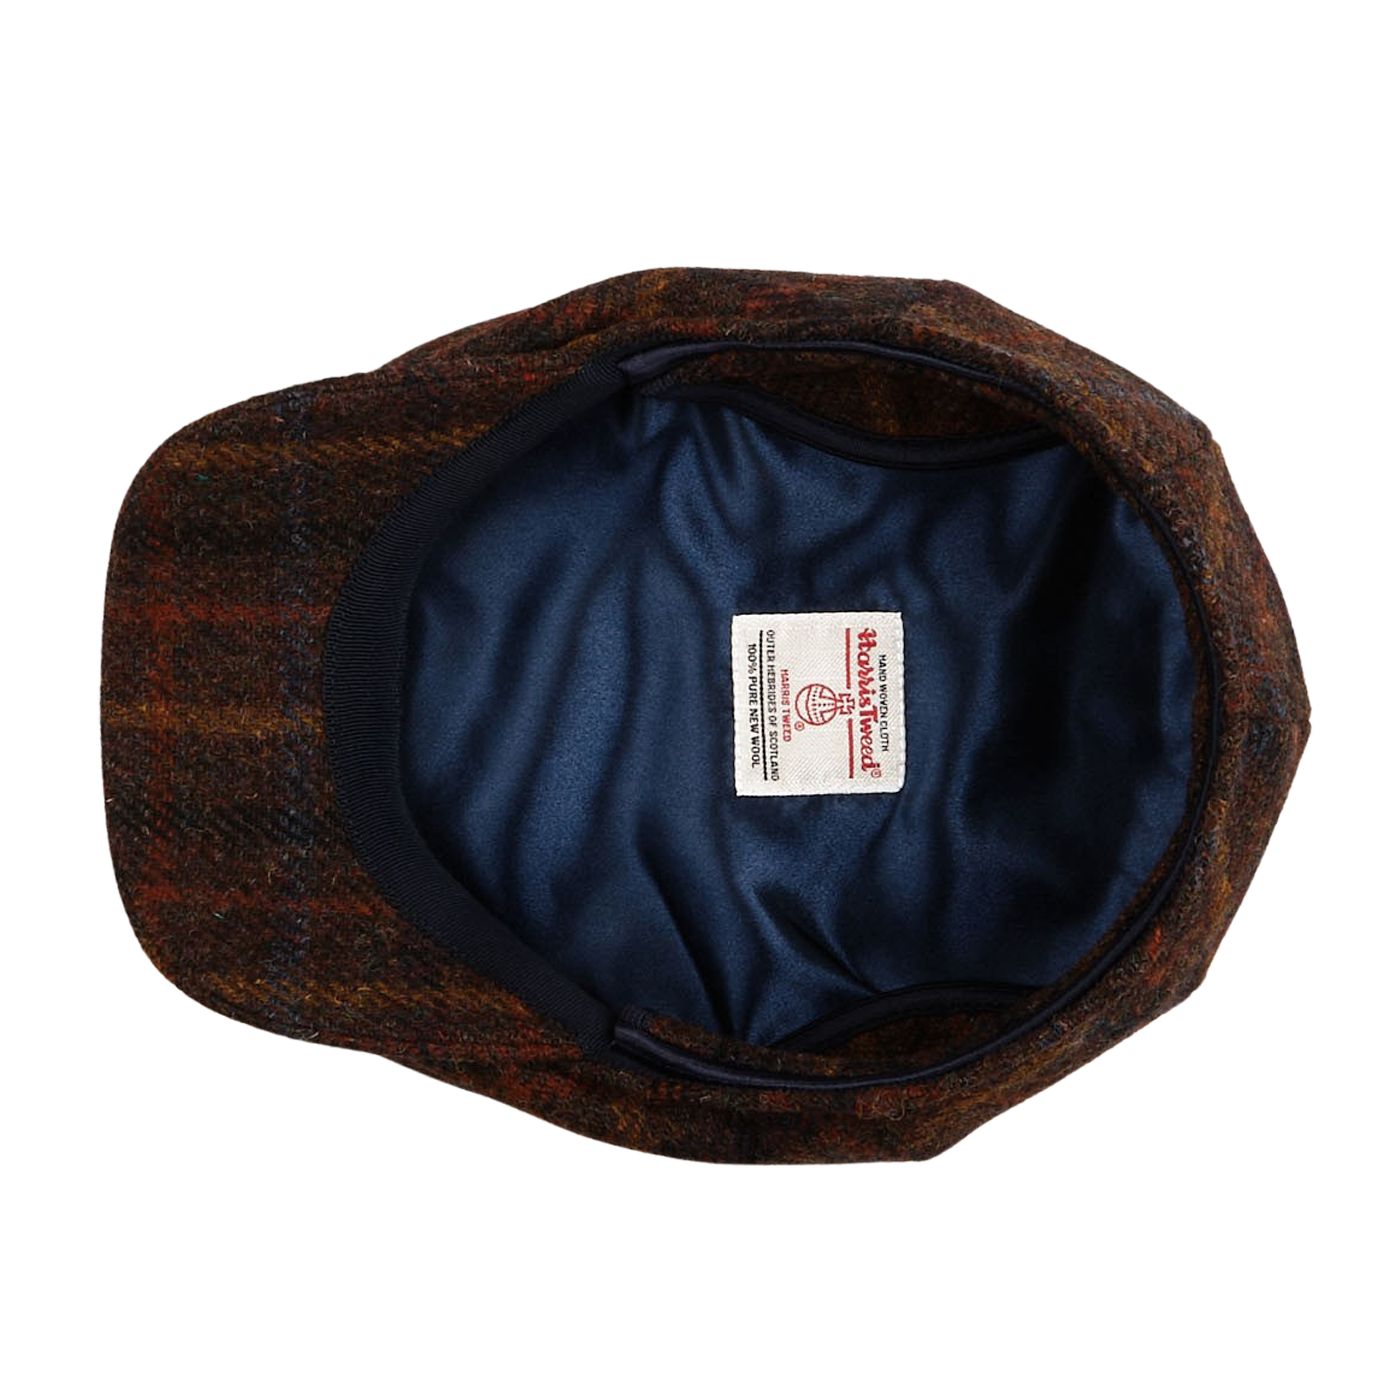 Harris Tweed Cap, Made in Canada, Wool Cap